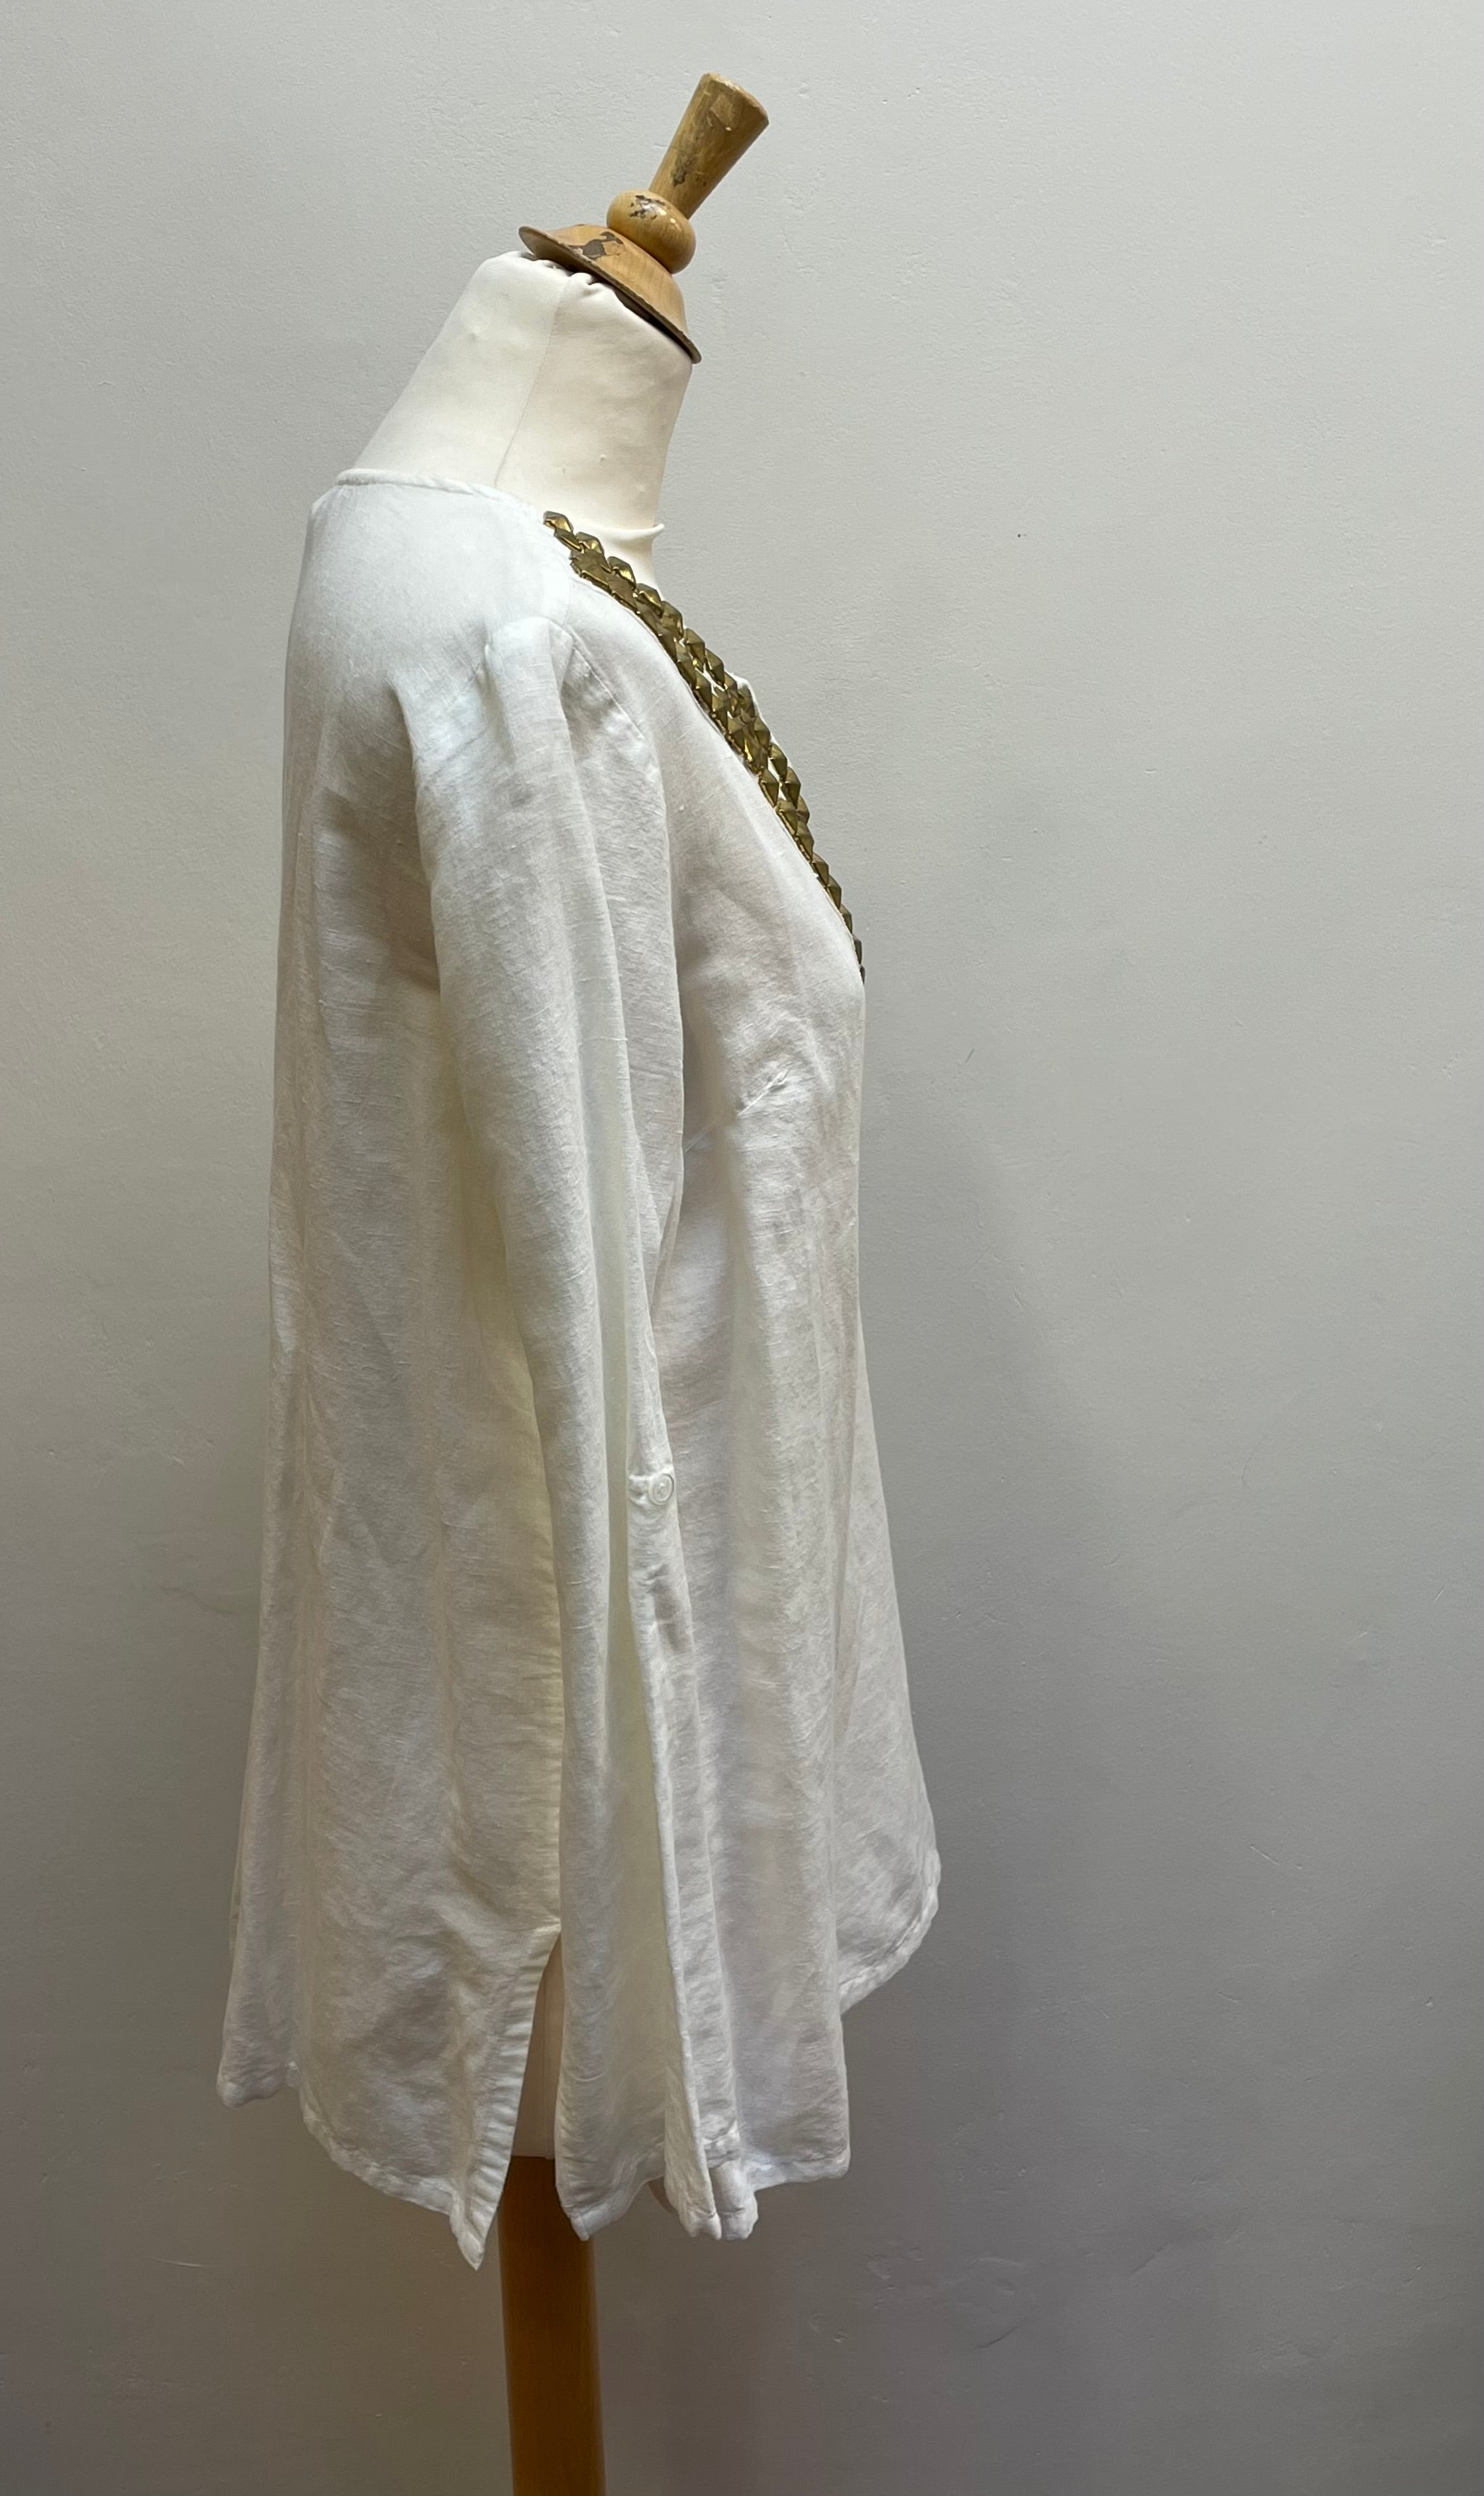 Michael Kors tuniek blouse maat M 38 wit linnen gouden studs